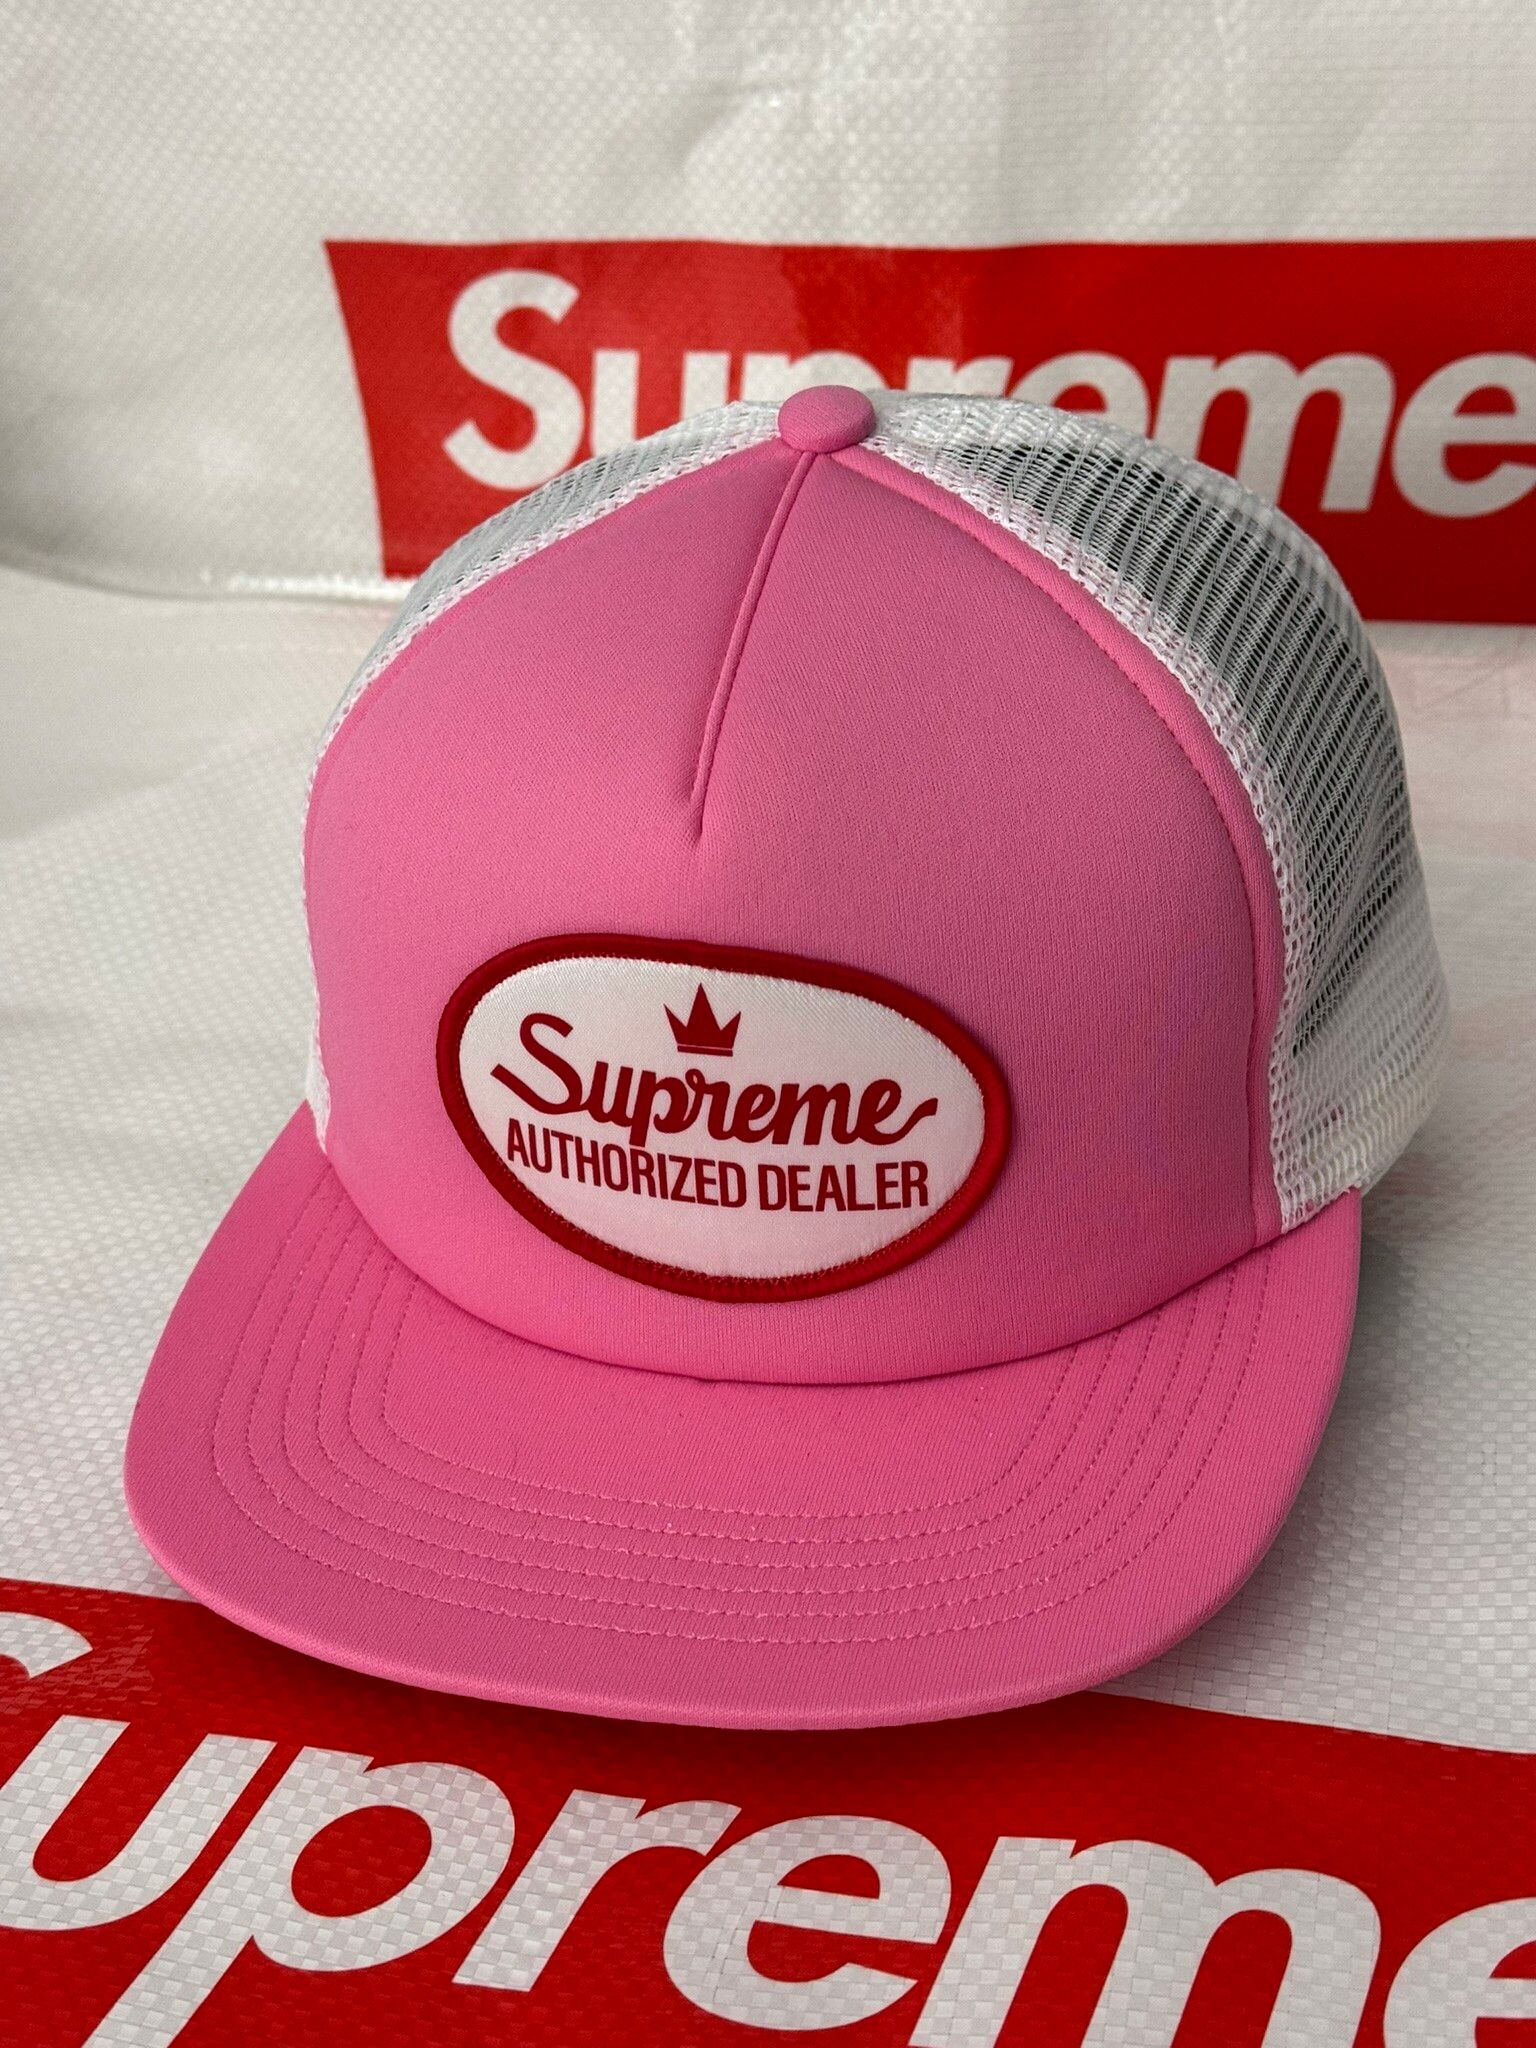 Supreme Supreme Authorized Mesh Back 5-Panel Pink hat cap | Grailed